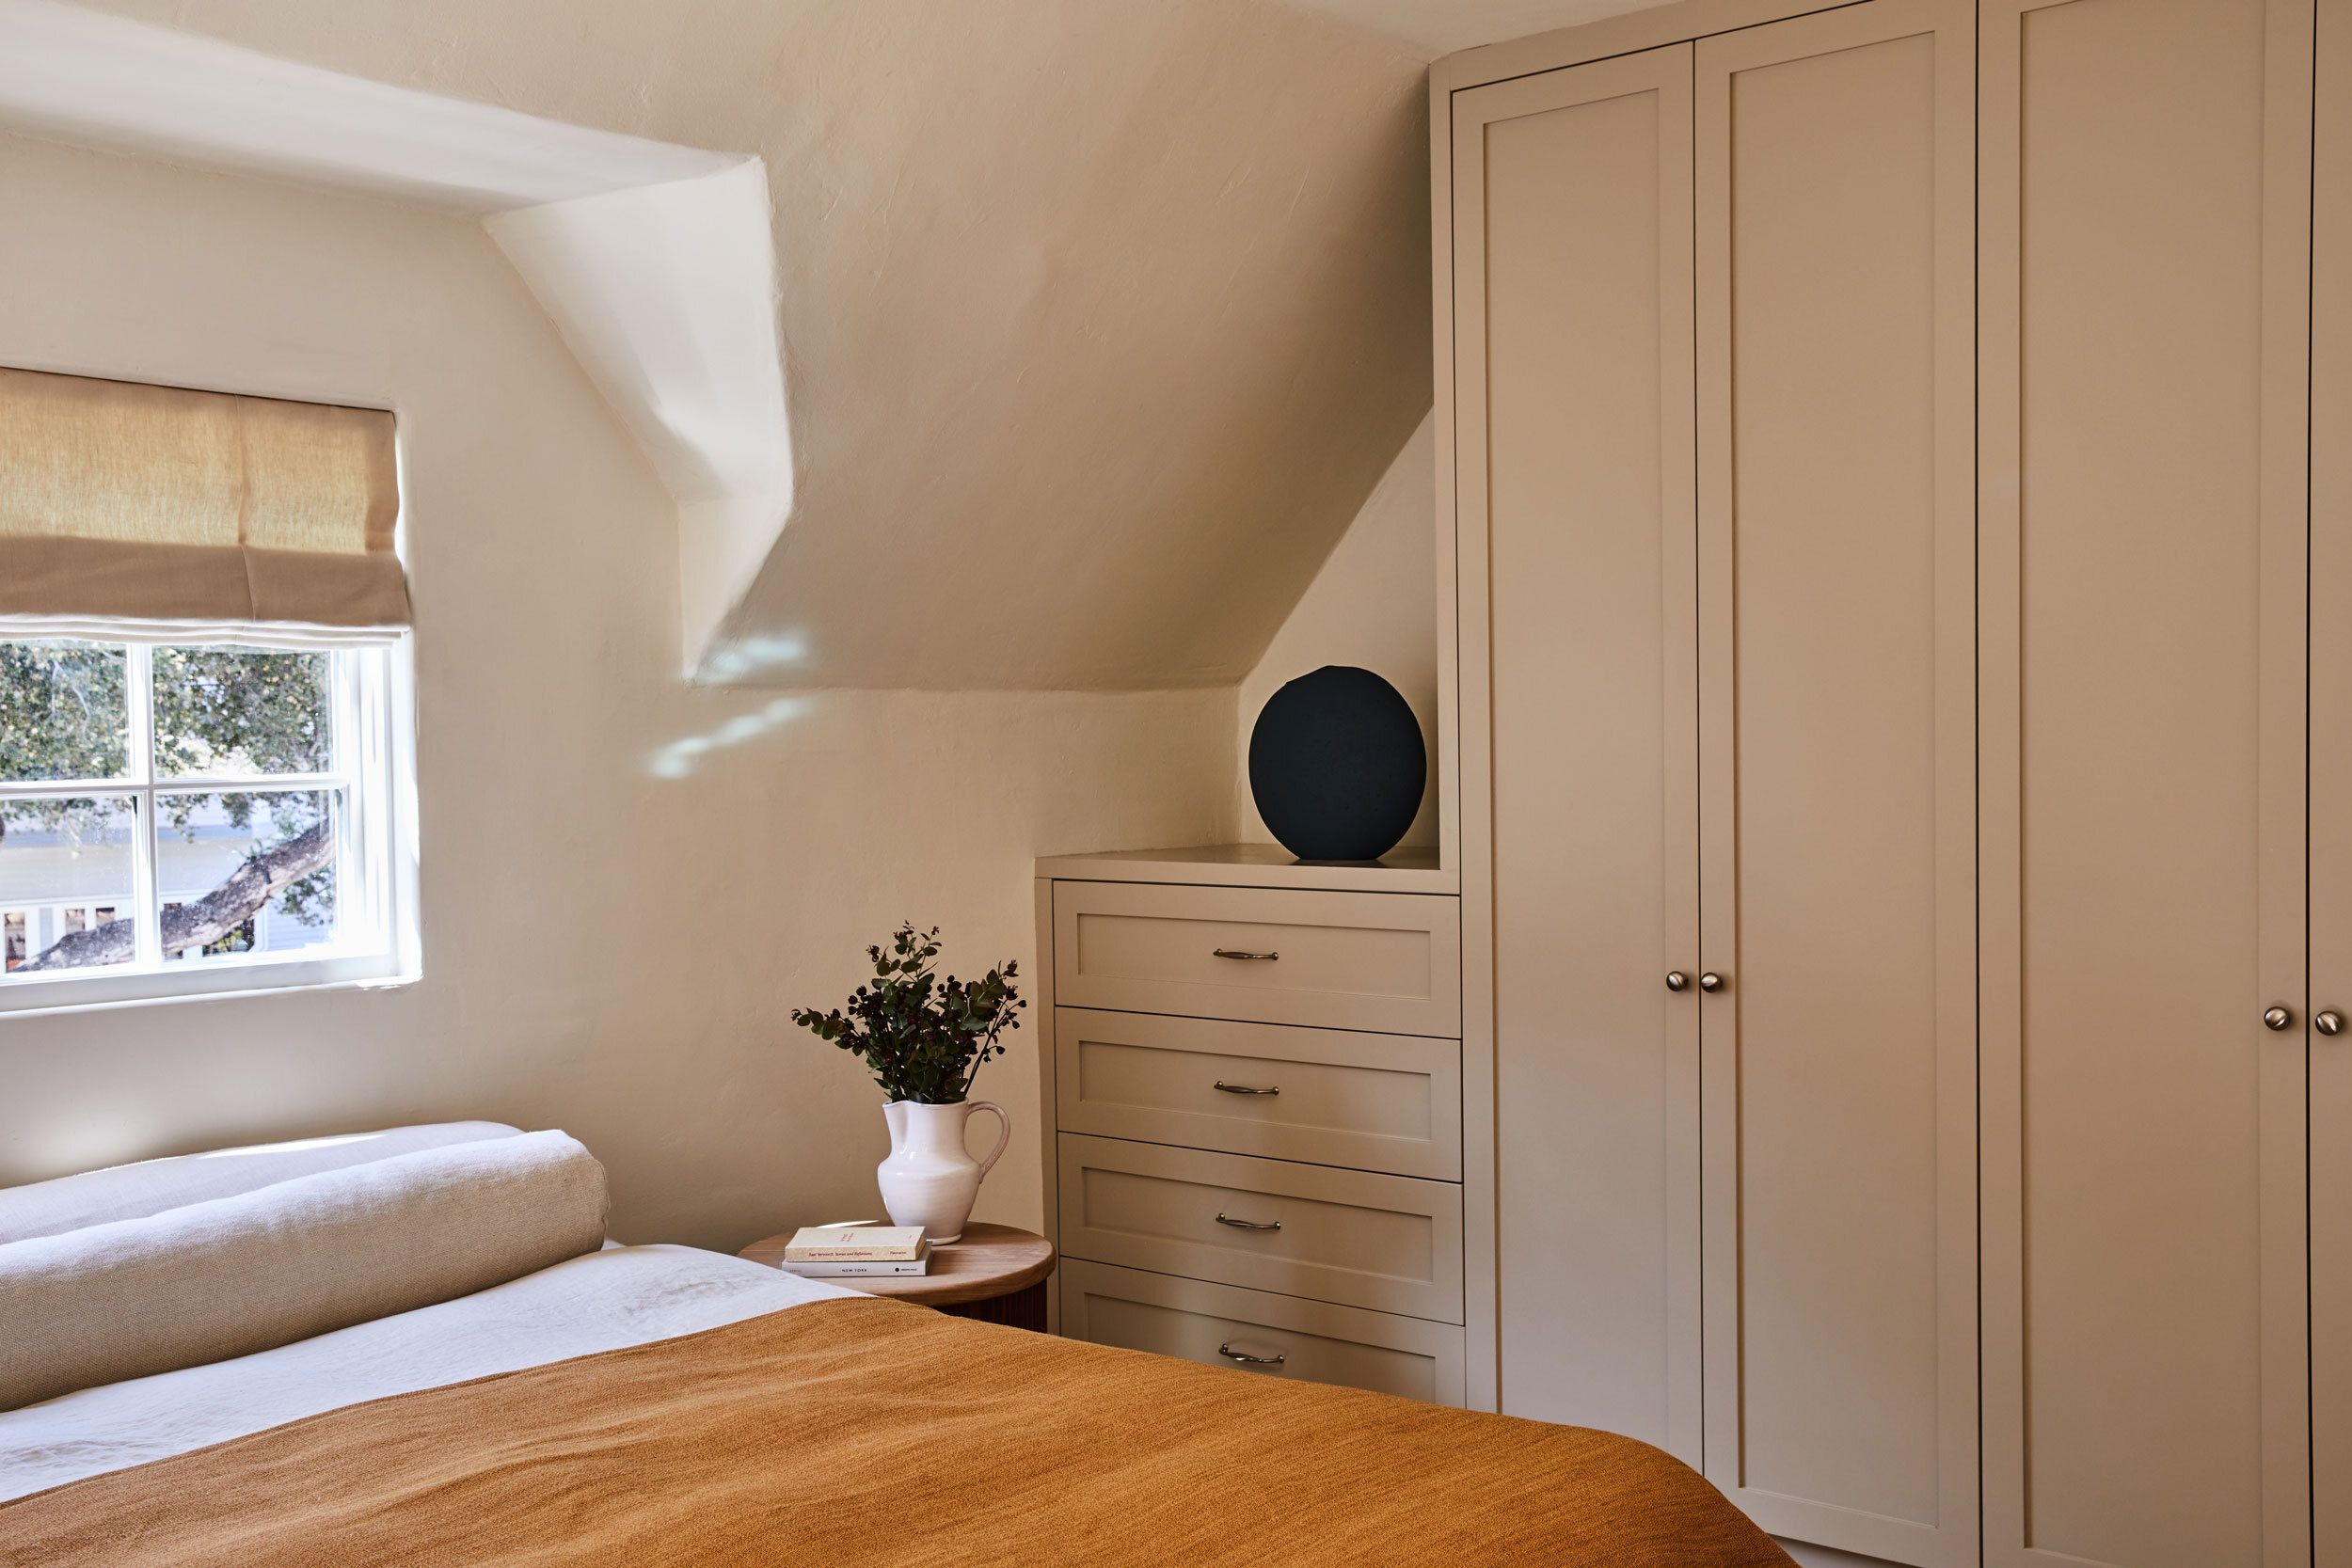 Small closet ideas: 10 smart designs for bedrooms